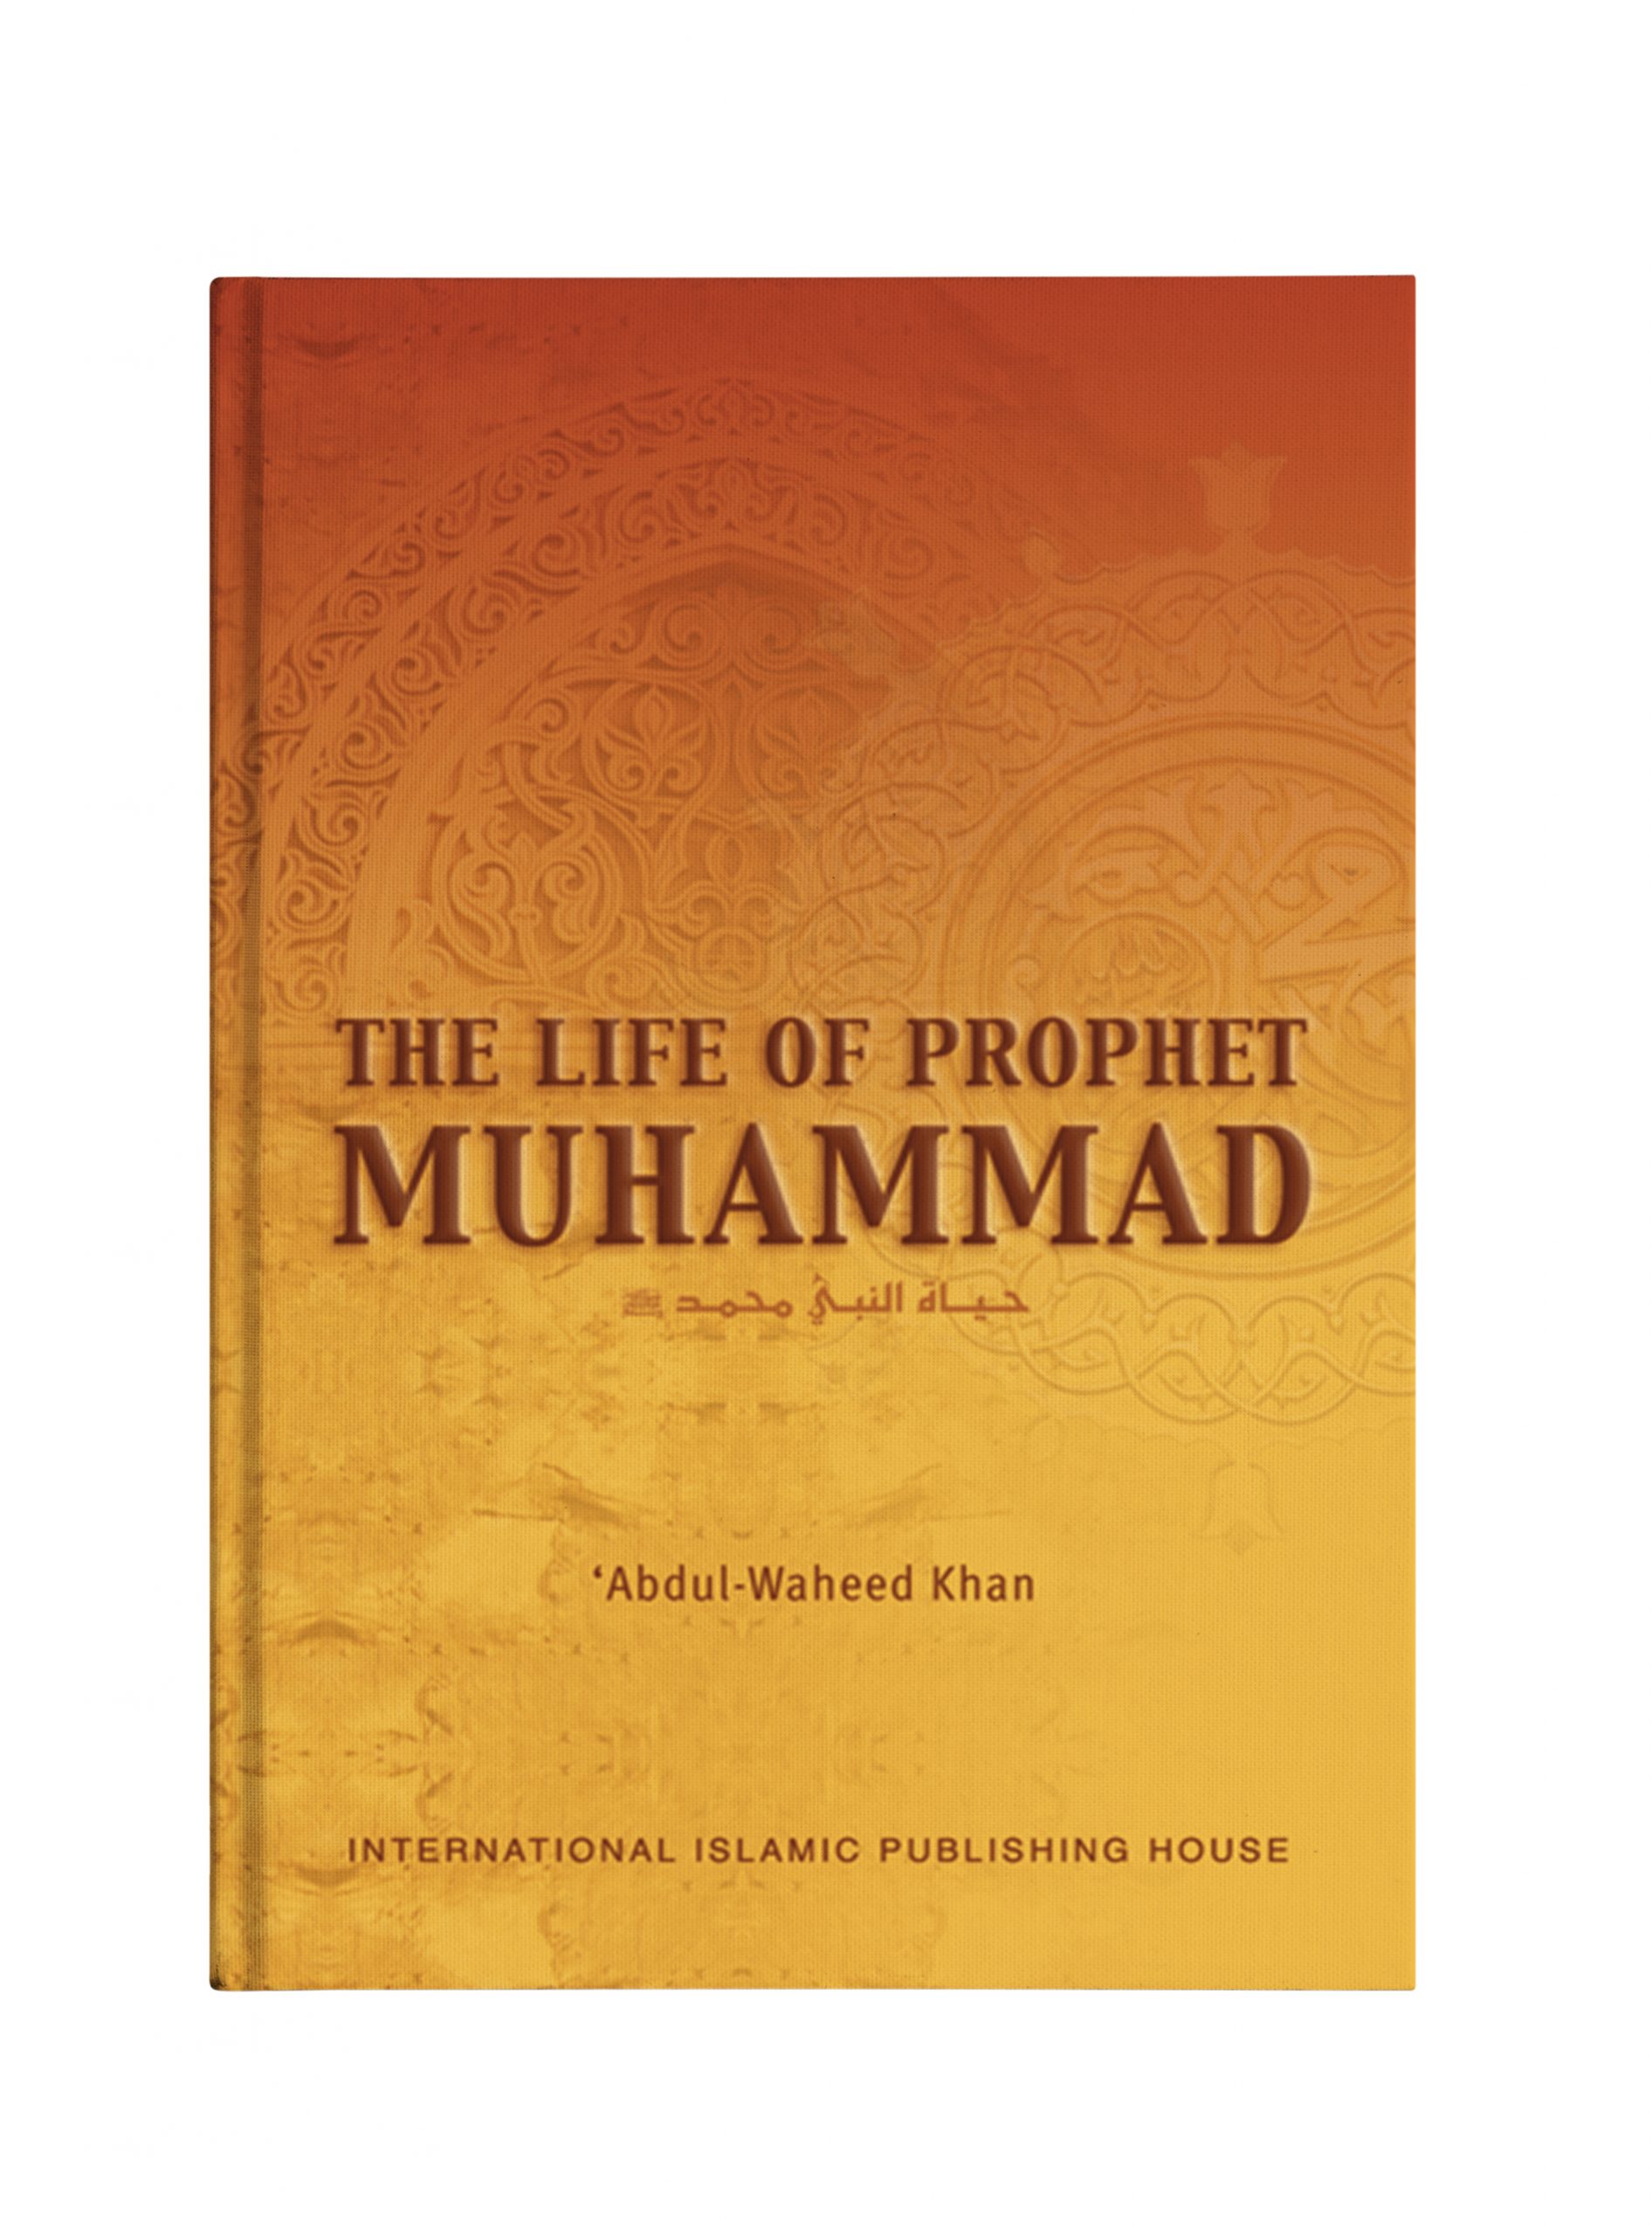 biography of prophet muhammad shia